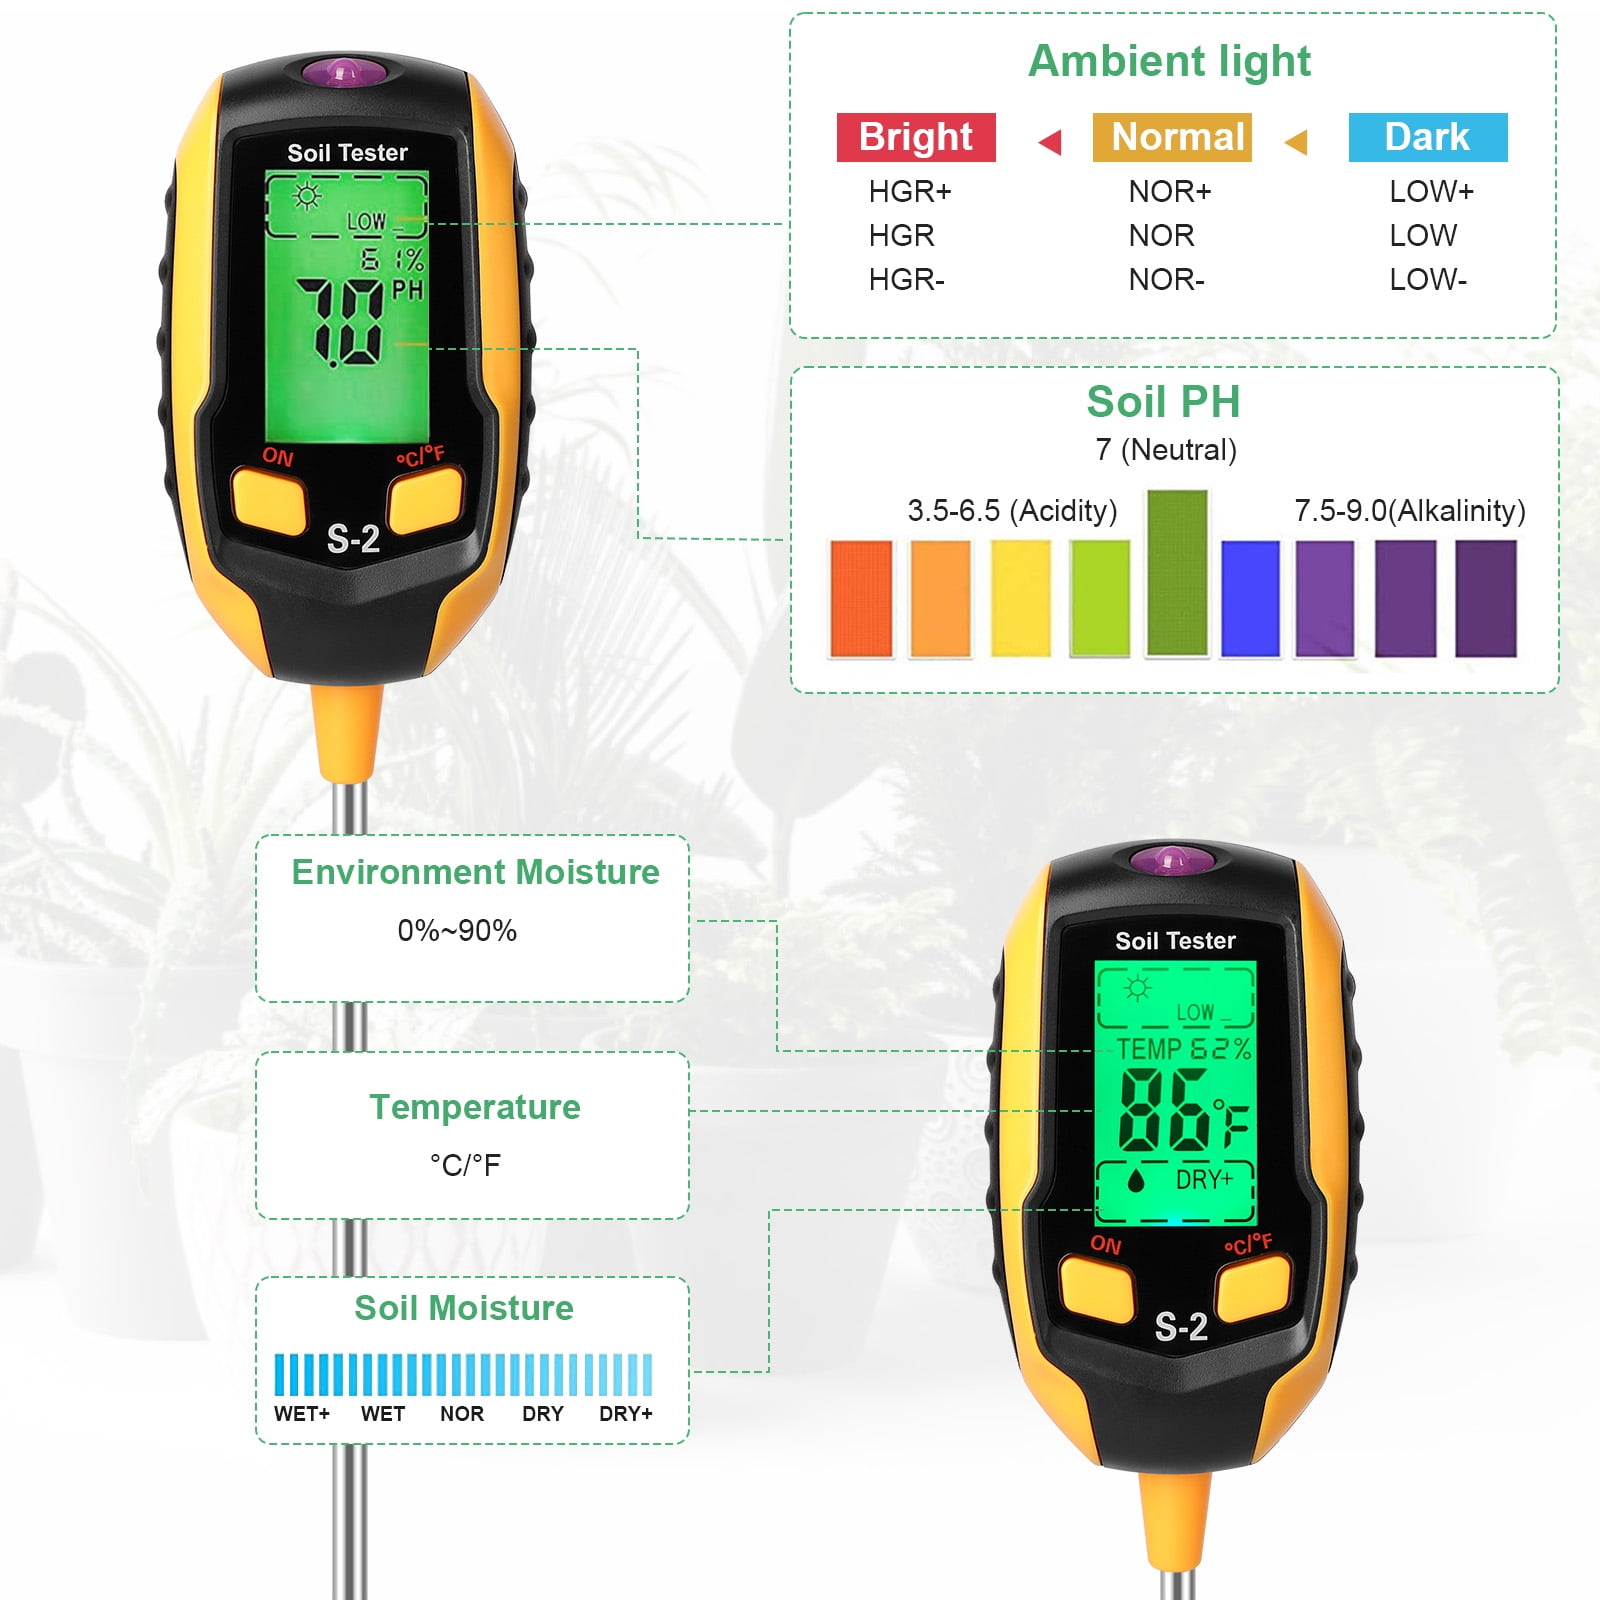 5 In 1 Soil Ph Meter Soil Moisture Monitor LCD Display PH Tester  Temperature Sunlight Intensity Testing Tool for Plants Illumination  Thermometer